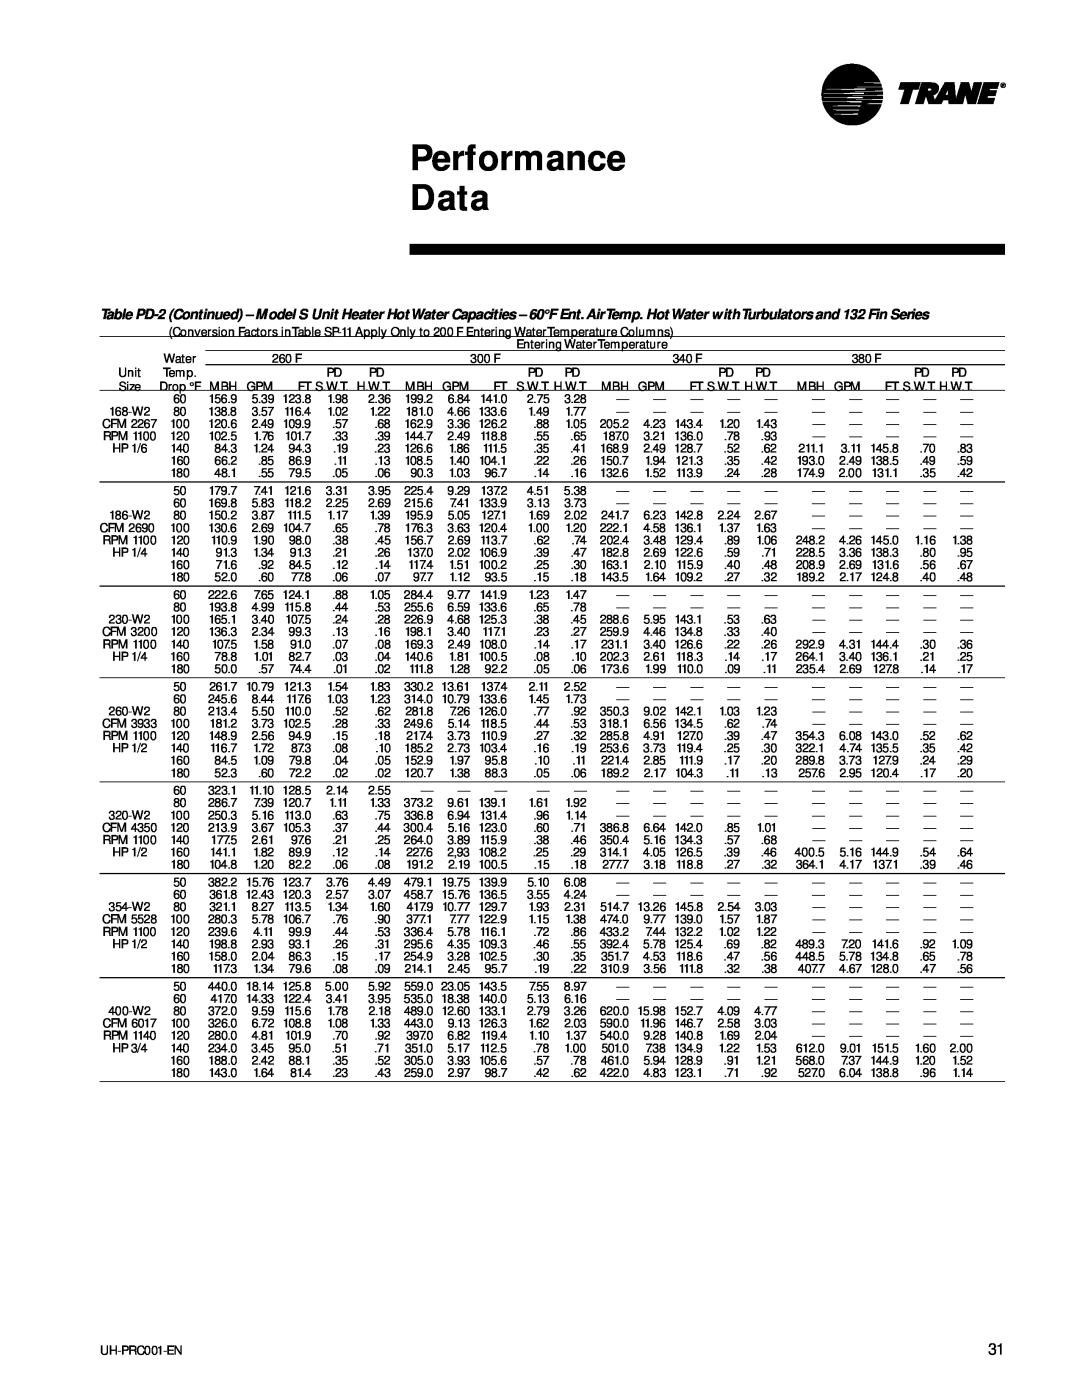 Trane UH-PRC001-EN manual Performance Data, Entering WaterTemperature 